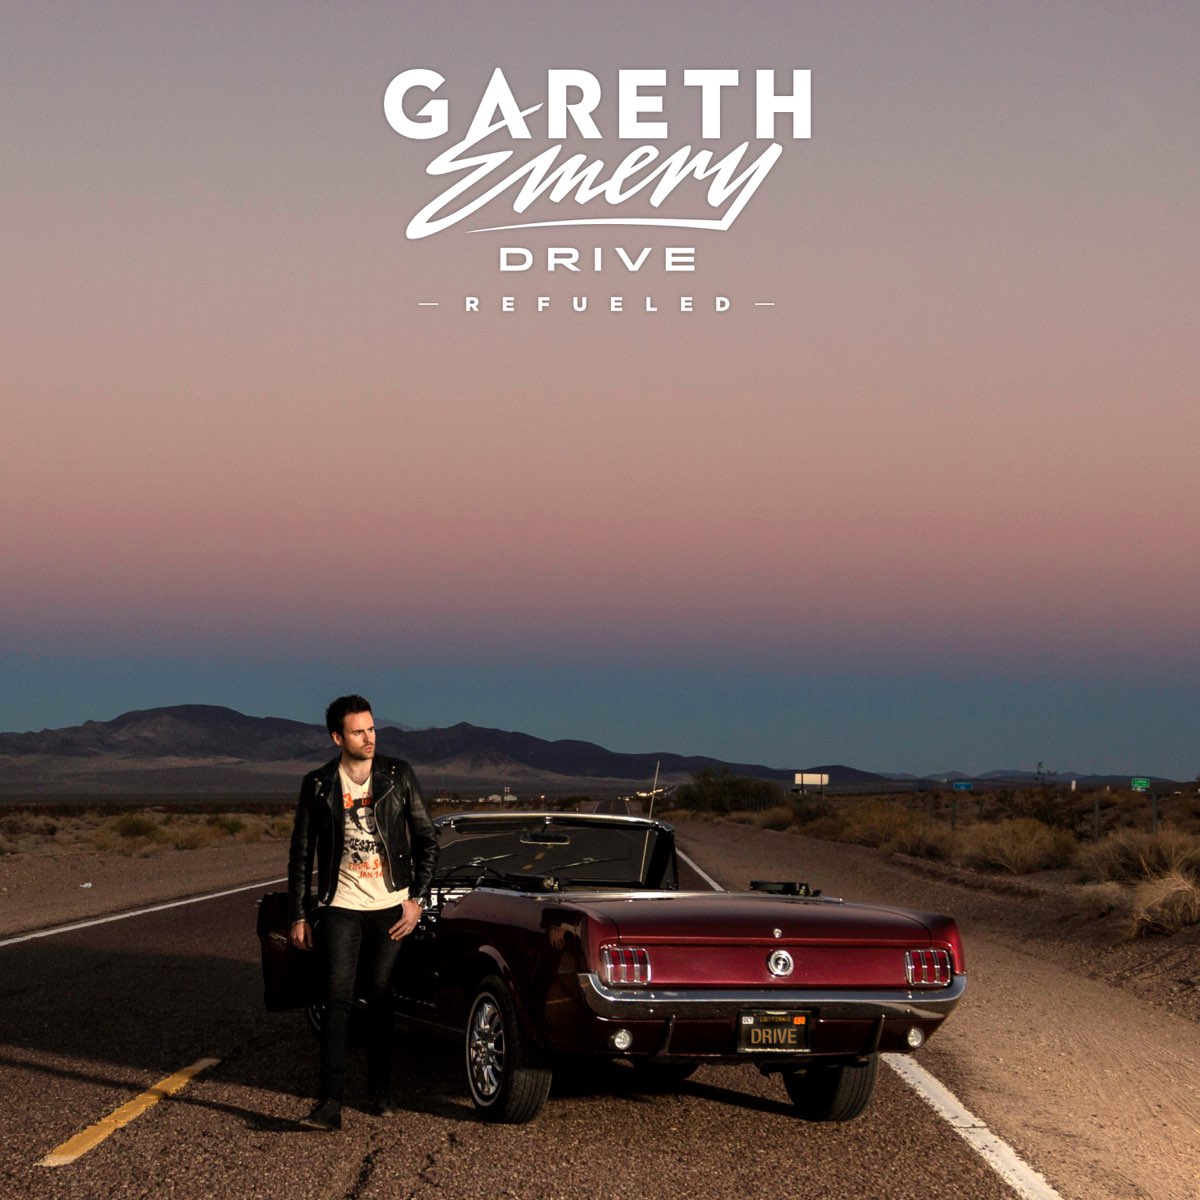 Drive: Refueled by Gareth Emery on Apple Music